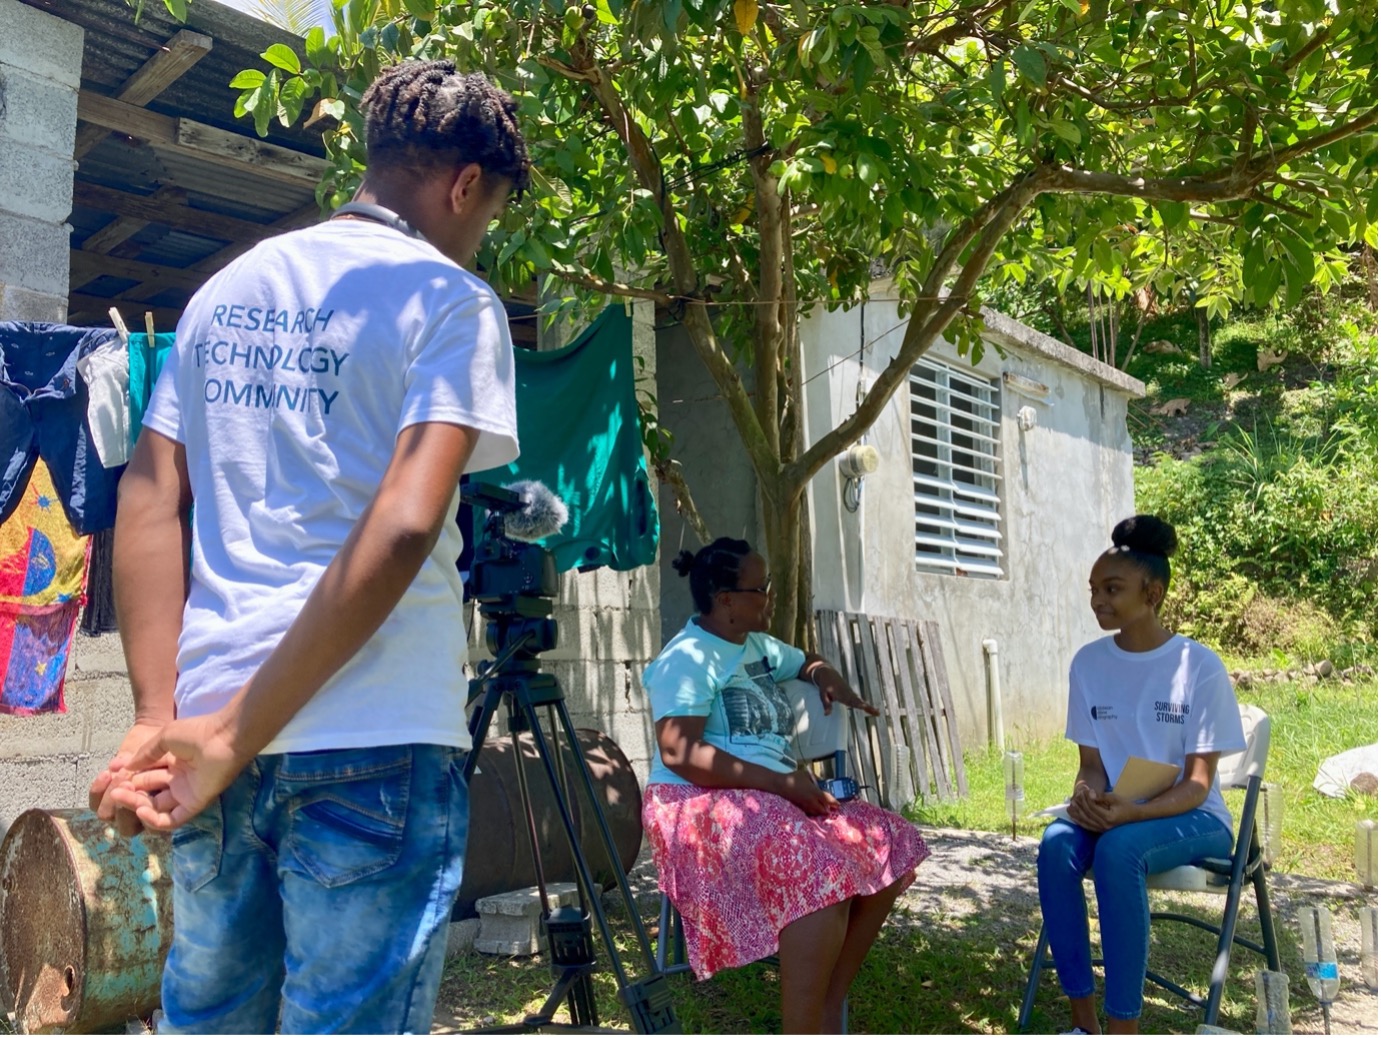 Priscilla | Loubiere | Dominica Story Project￼